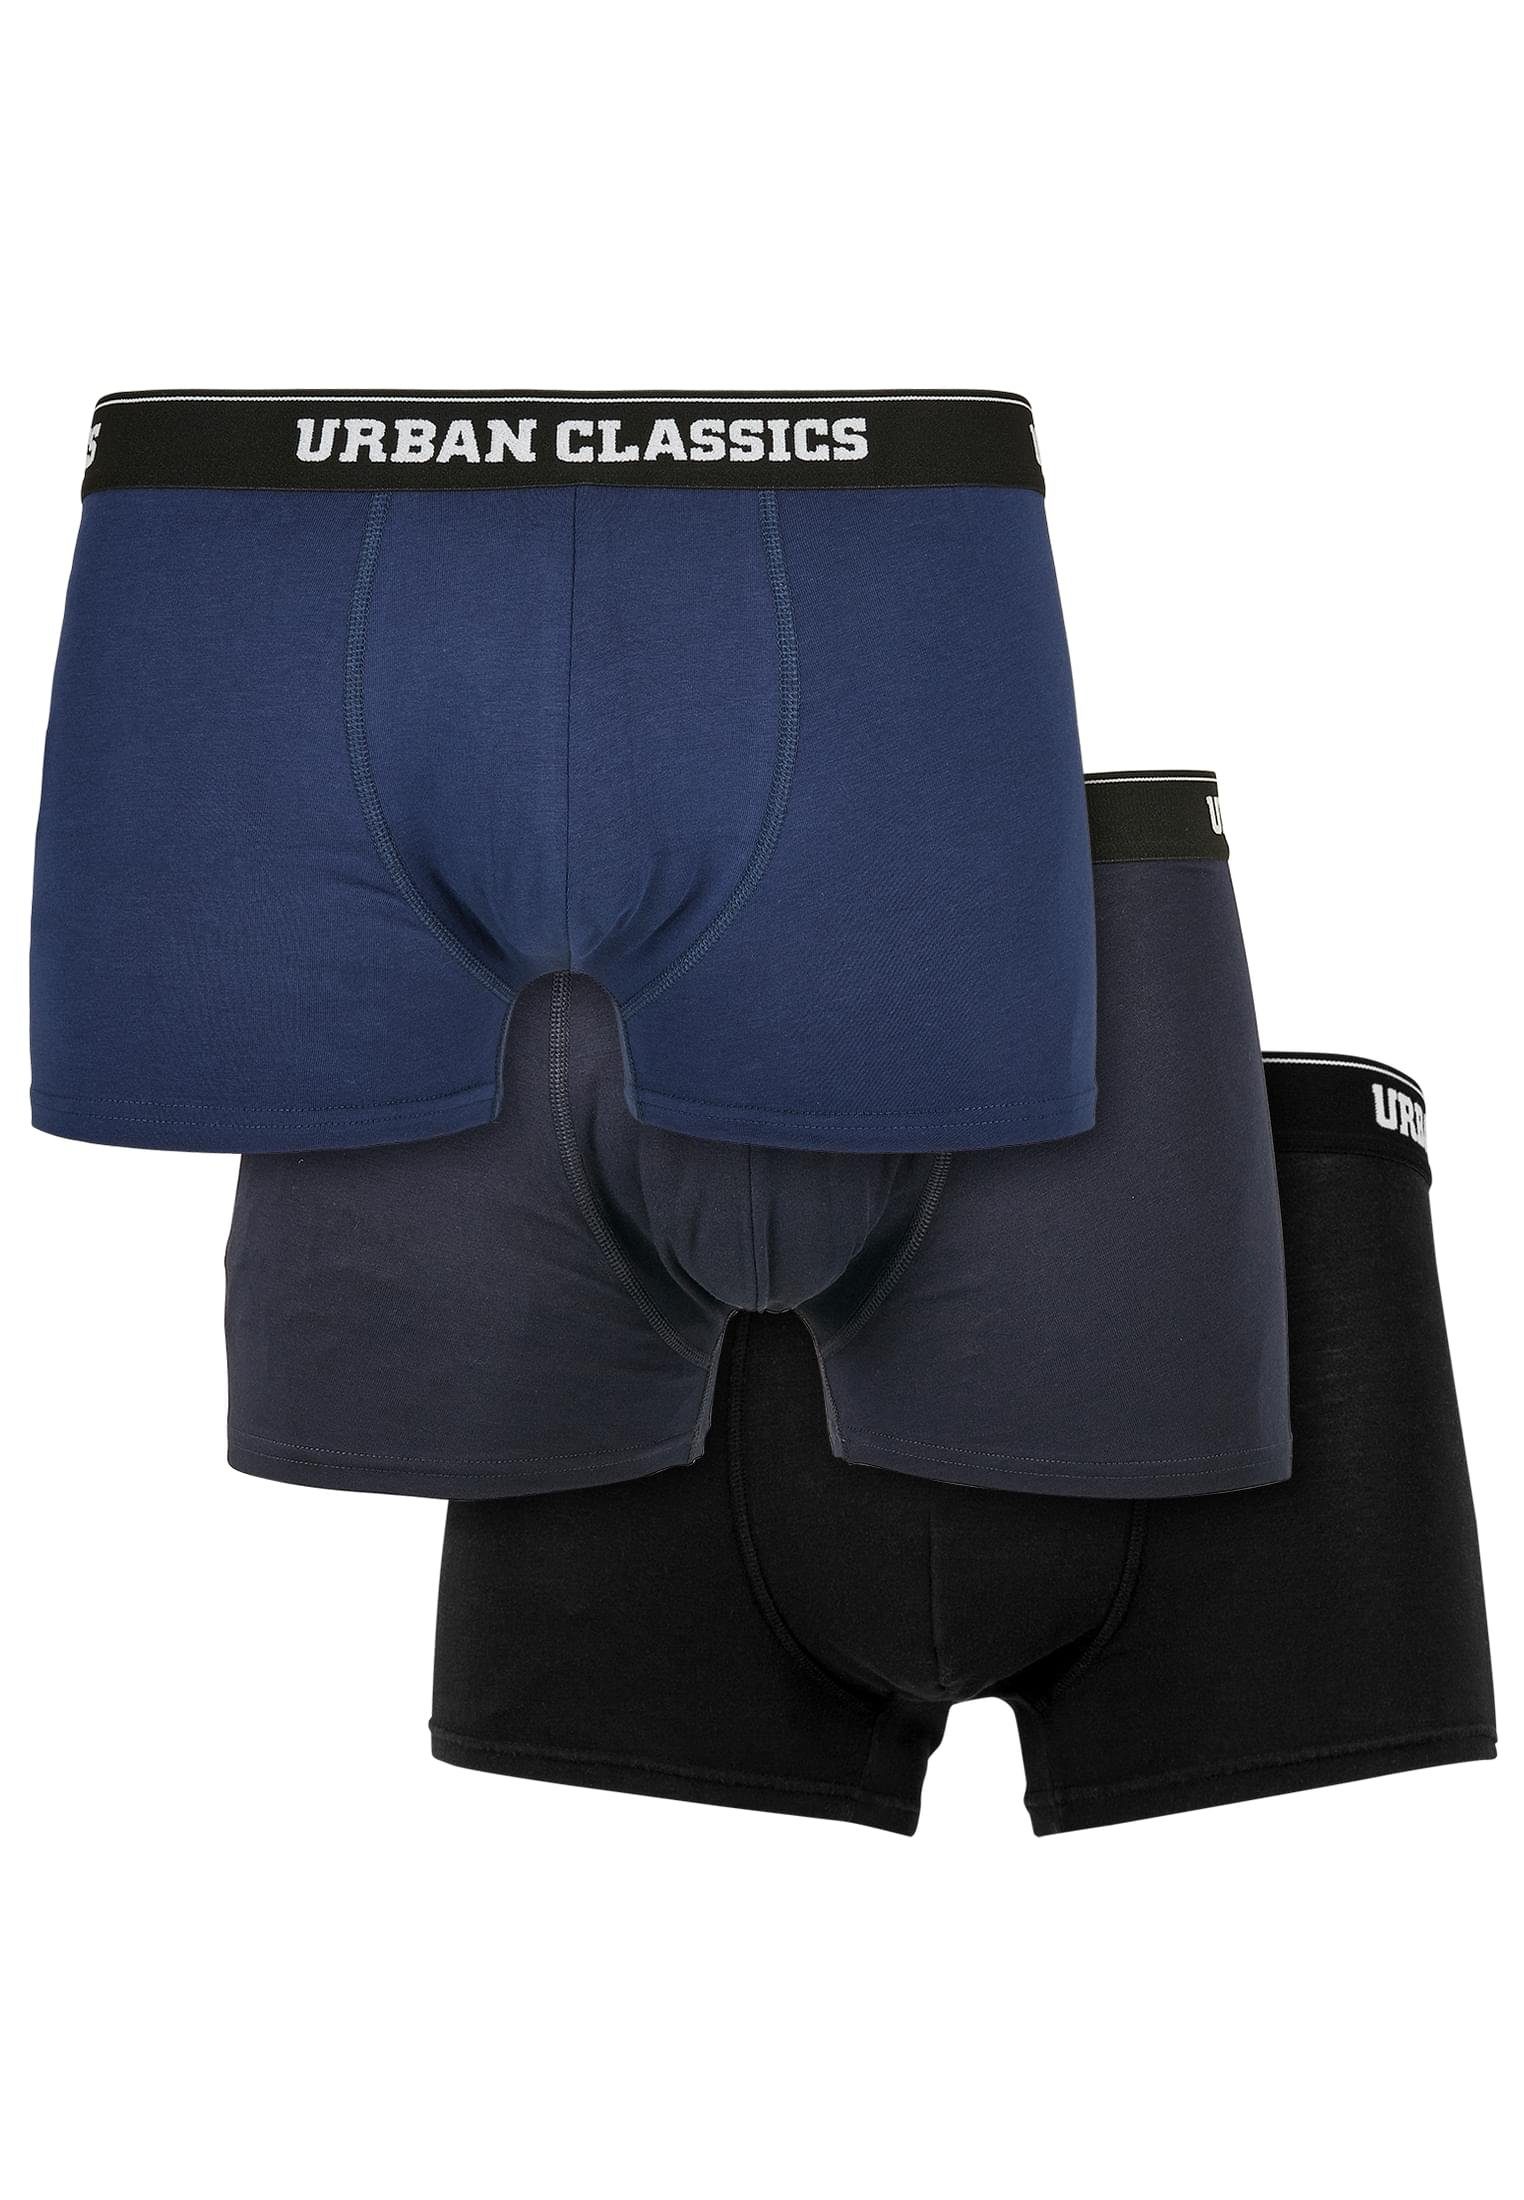 URBAN CLASSICS Boxershorts Herren (1-St) darkblue Organic navy Shorts black 3-Pack Boxer